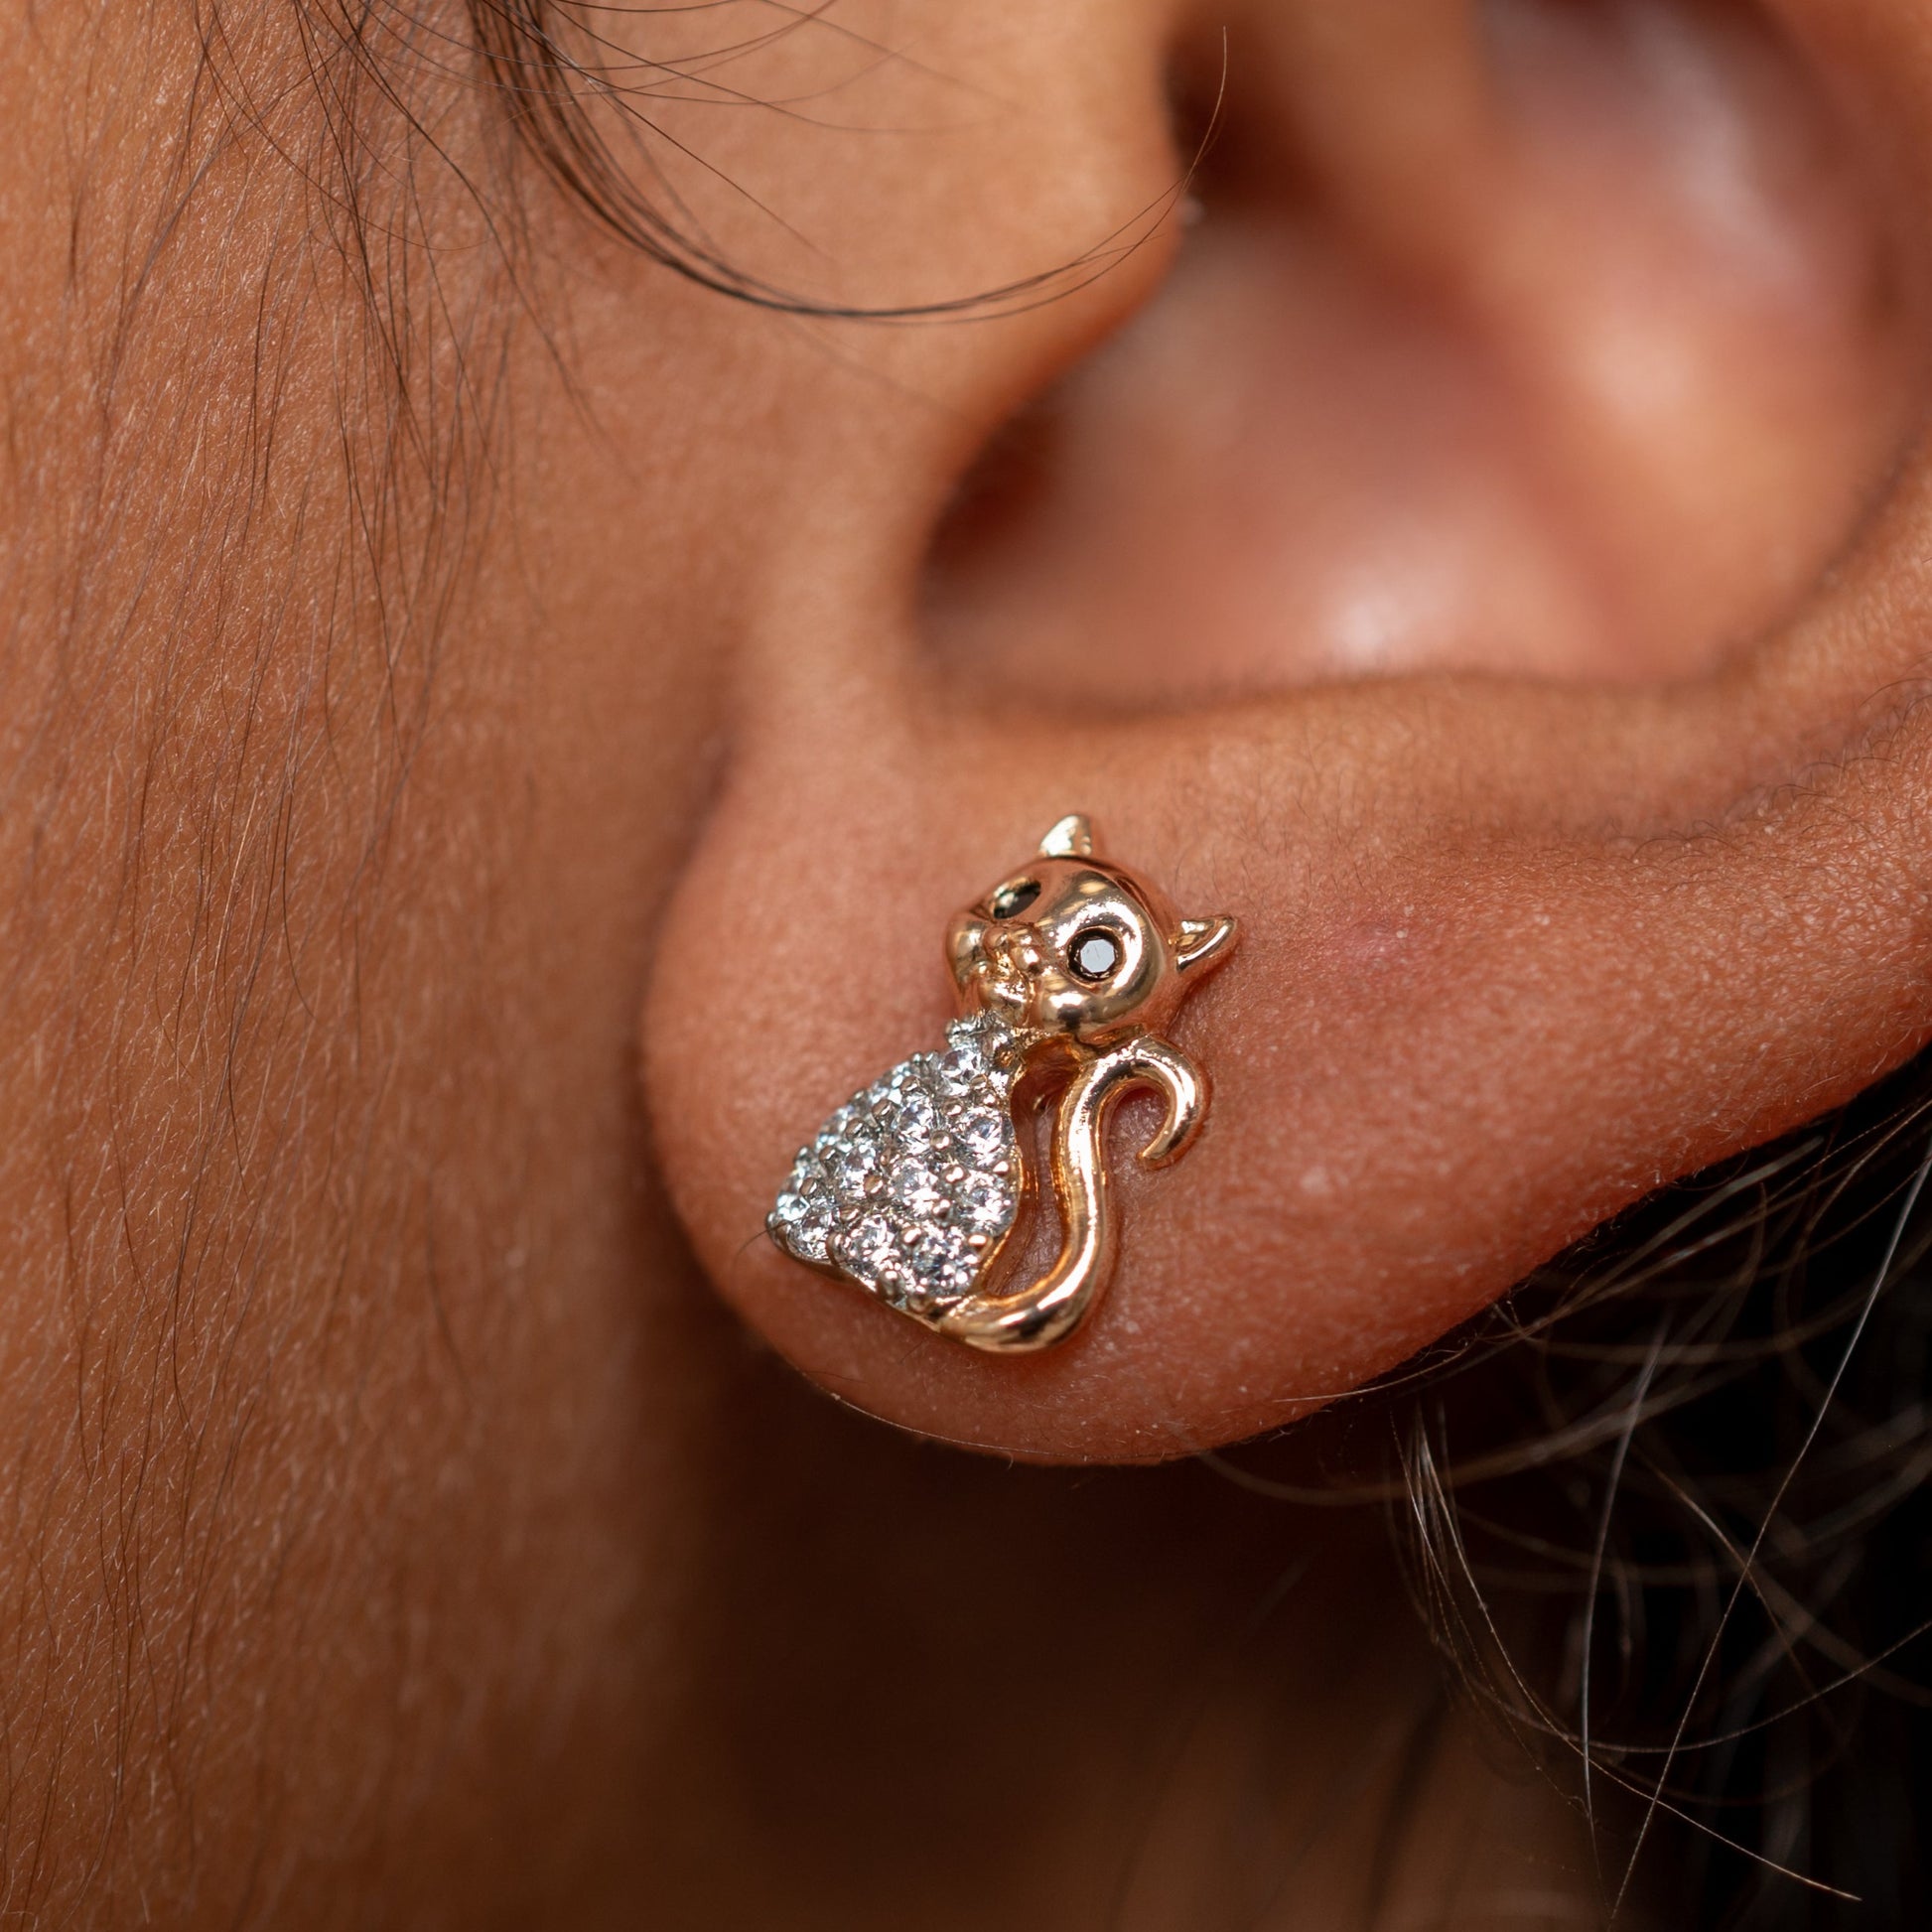 harma jewelry girls chic cat stud earrings in 18k gold plating